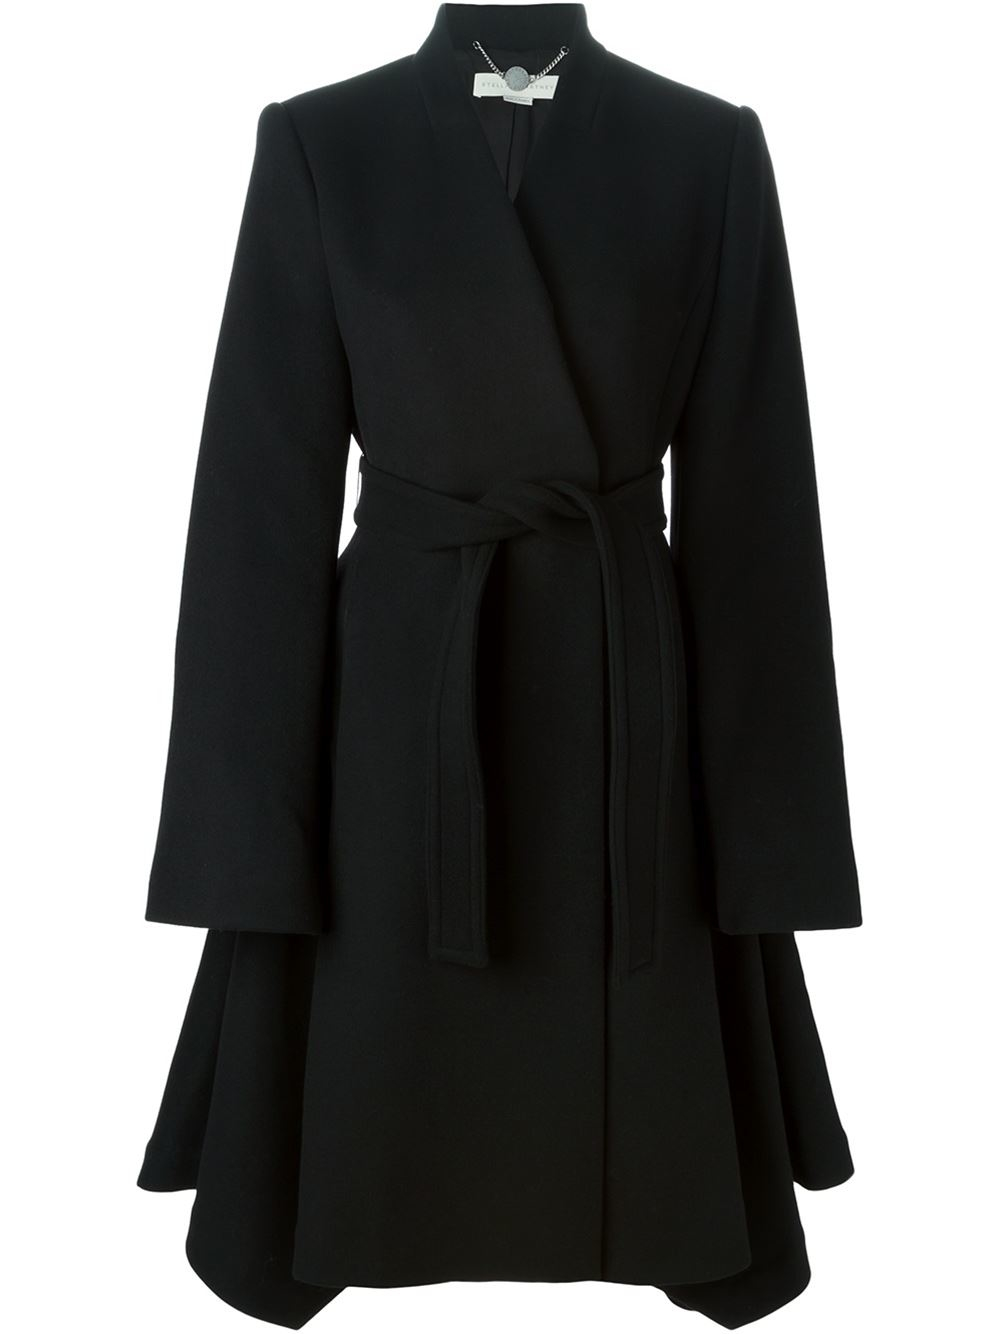 Stella mccartney Asymmetric Hem Coat in Black | Lyst